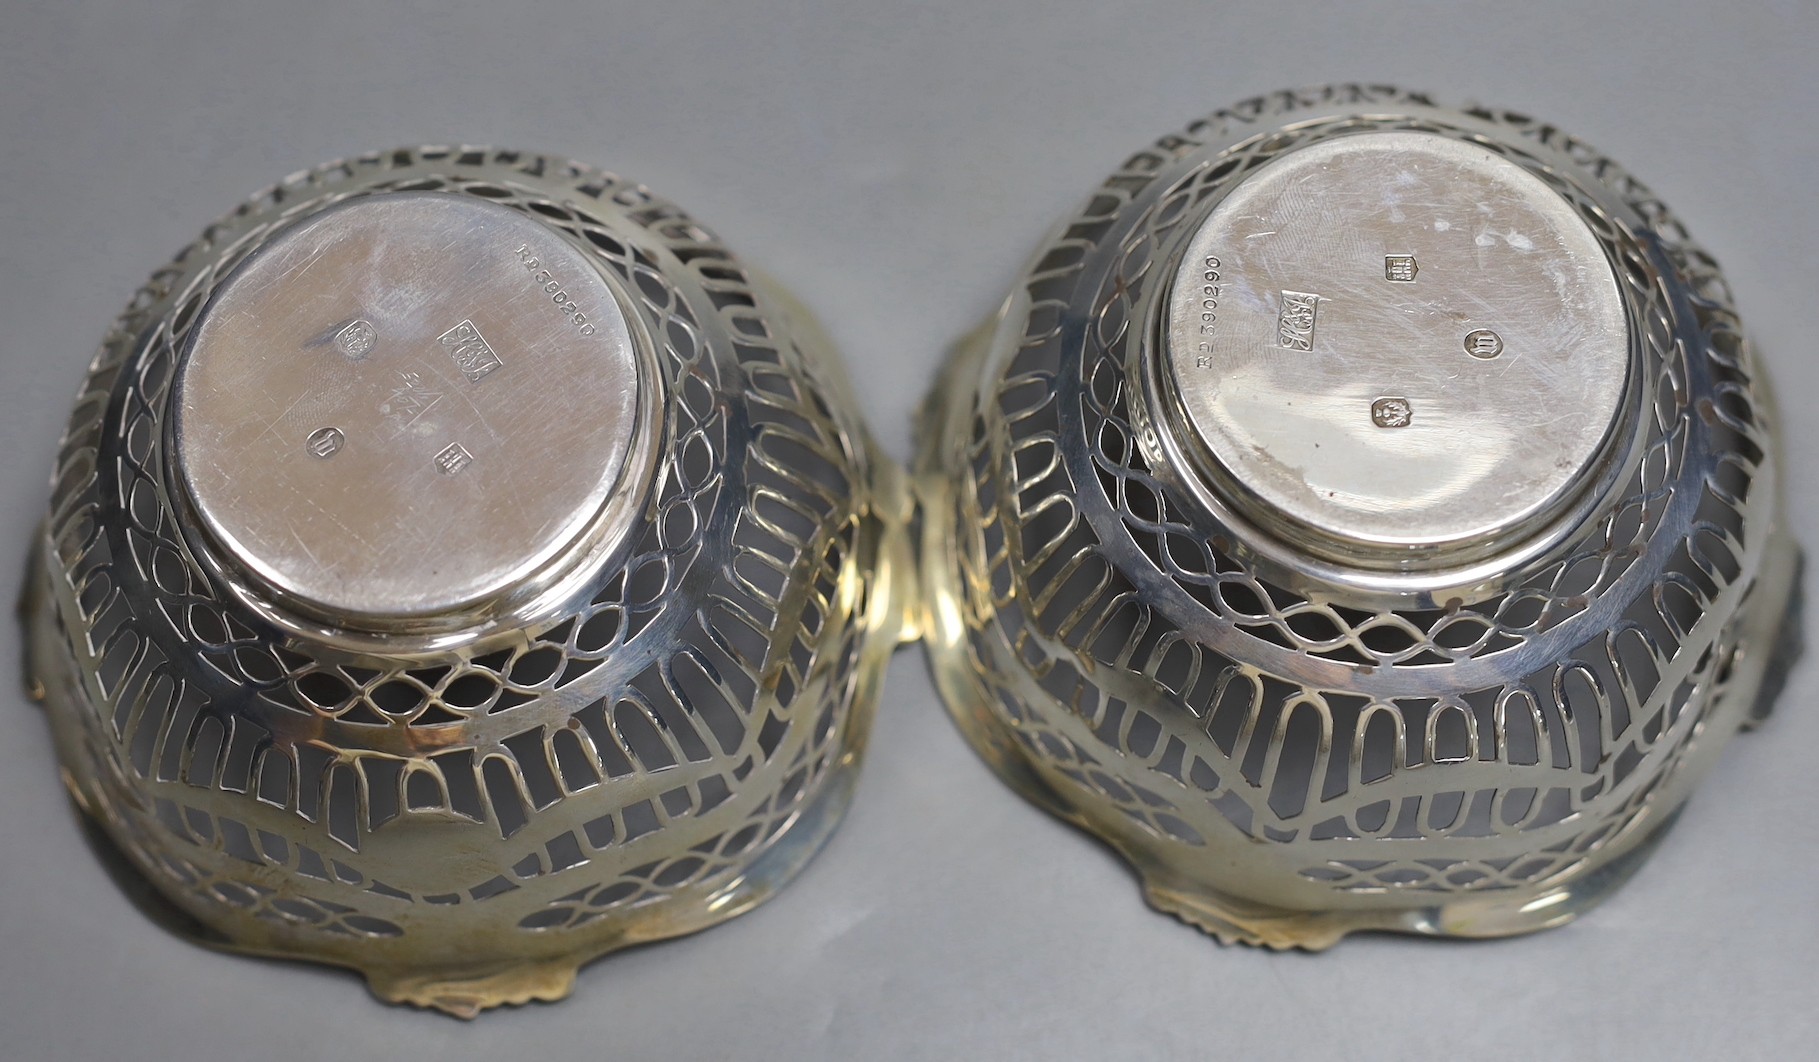 A pair of Edwardian Scottish pieced silver bonbon dishes, Hamilton & Inches, Edinburgh, 1902, diameter 10.6cm, 206 grams.